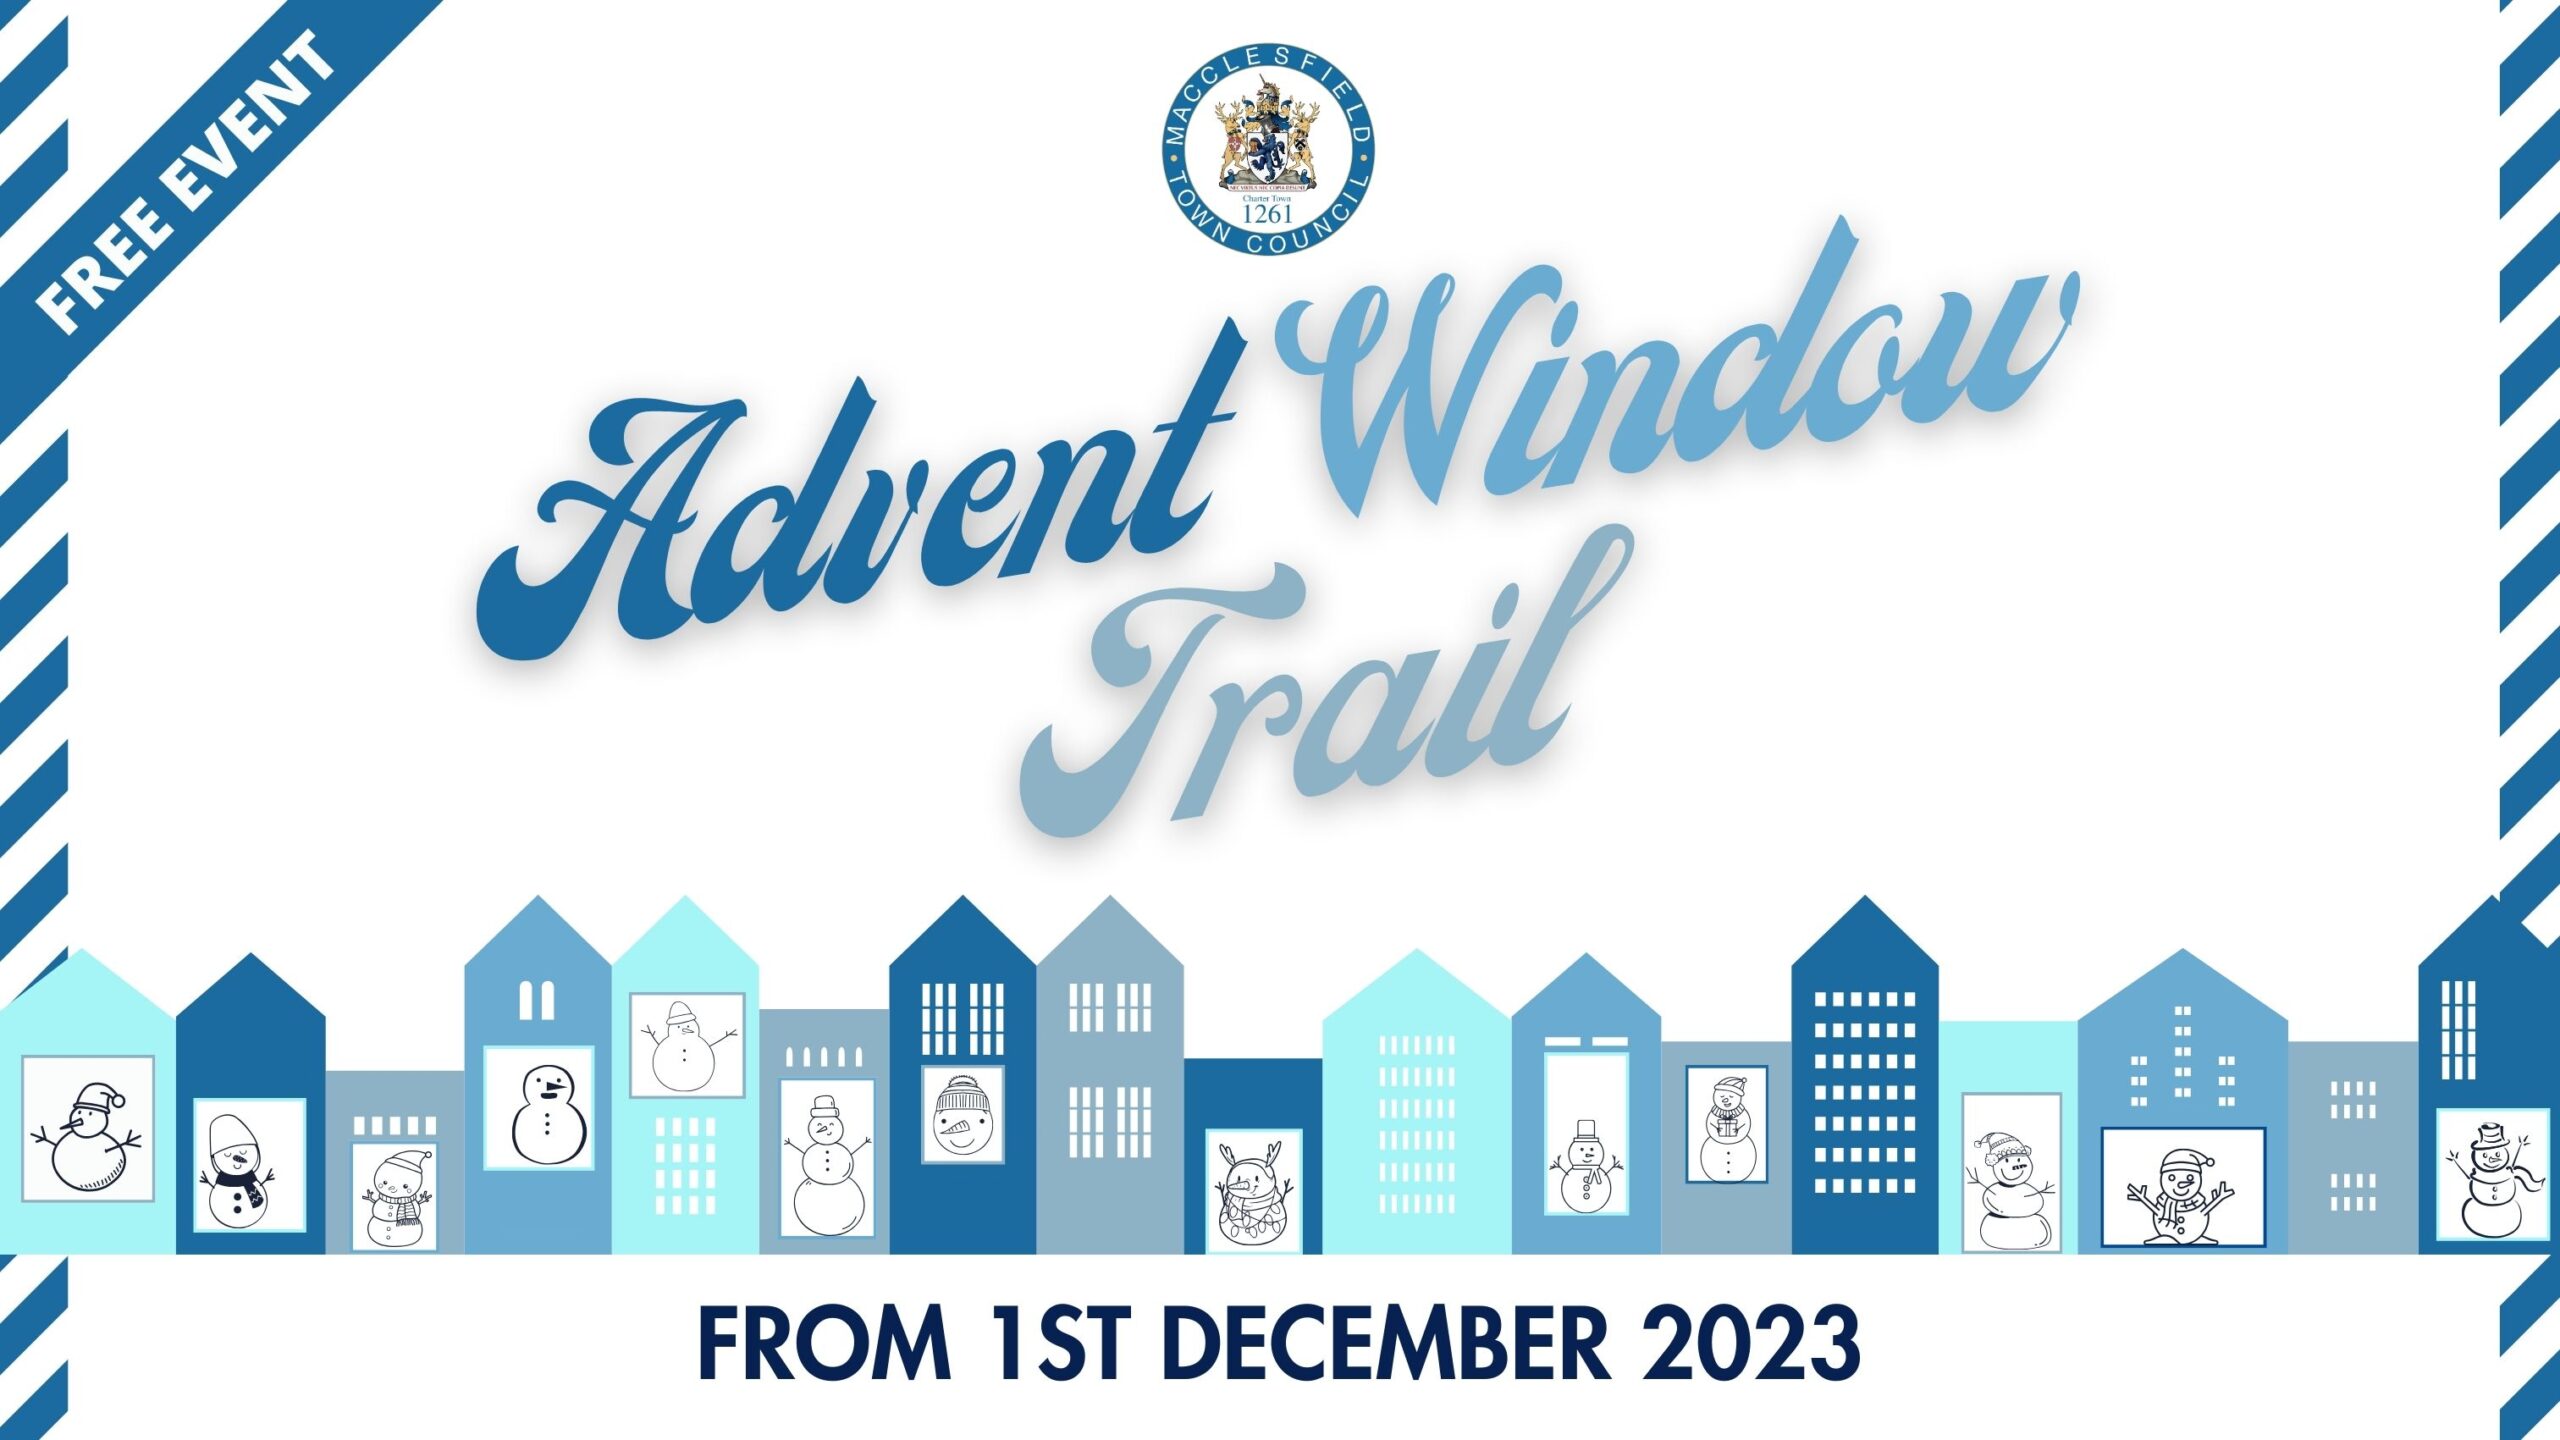 Advent Window Trail (website)